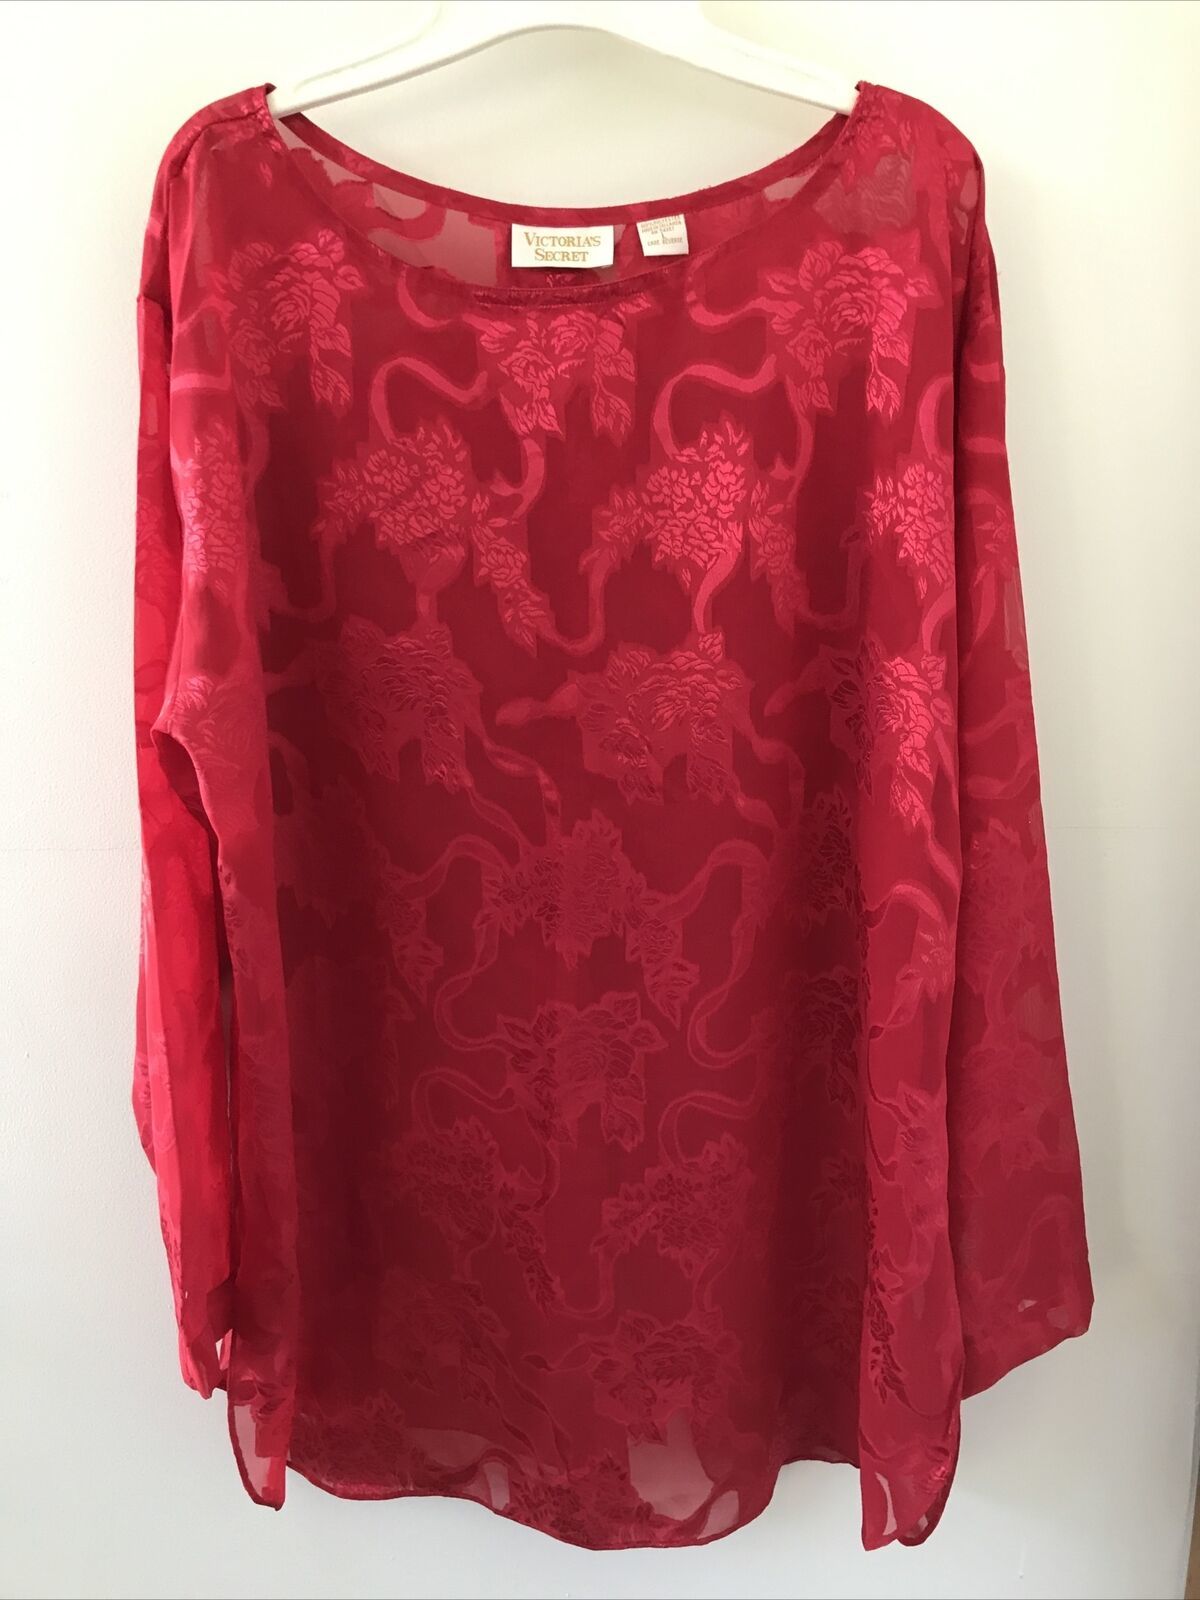 Primary image for Vtg Victorias Secret Gold Label Red Sheer Floral Flowy Pajama Shirt Gown Top L